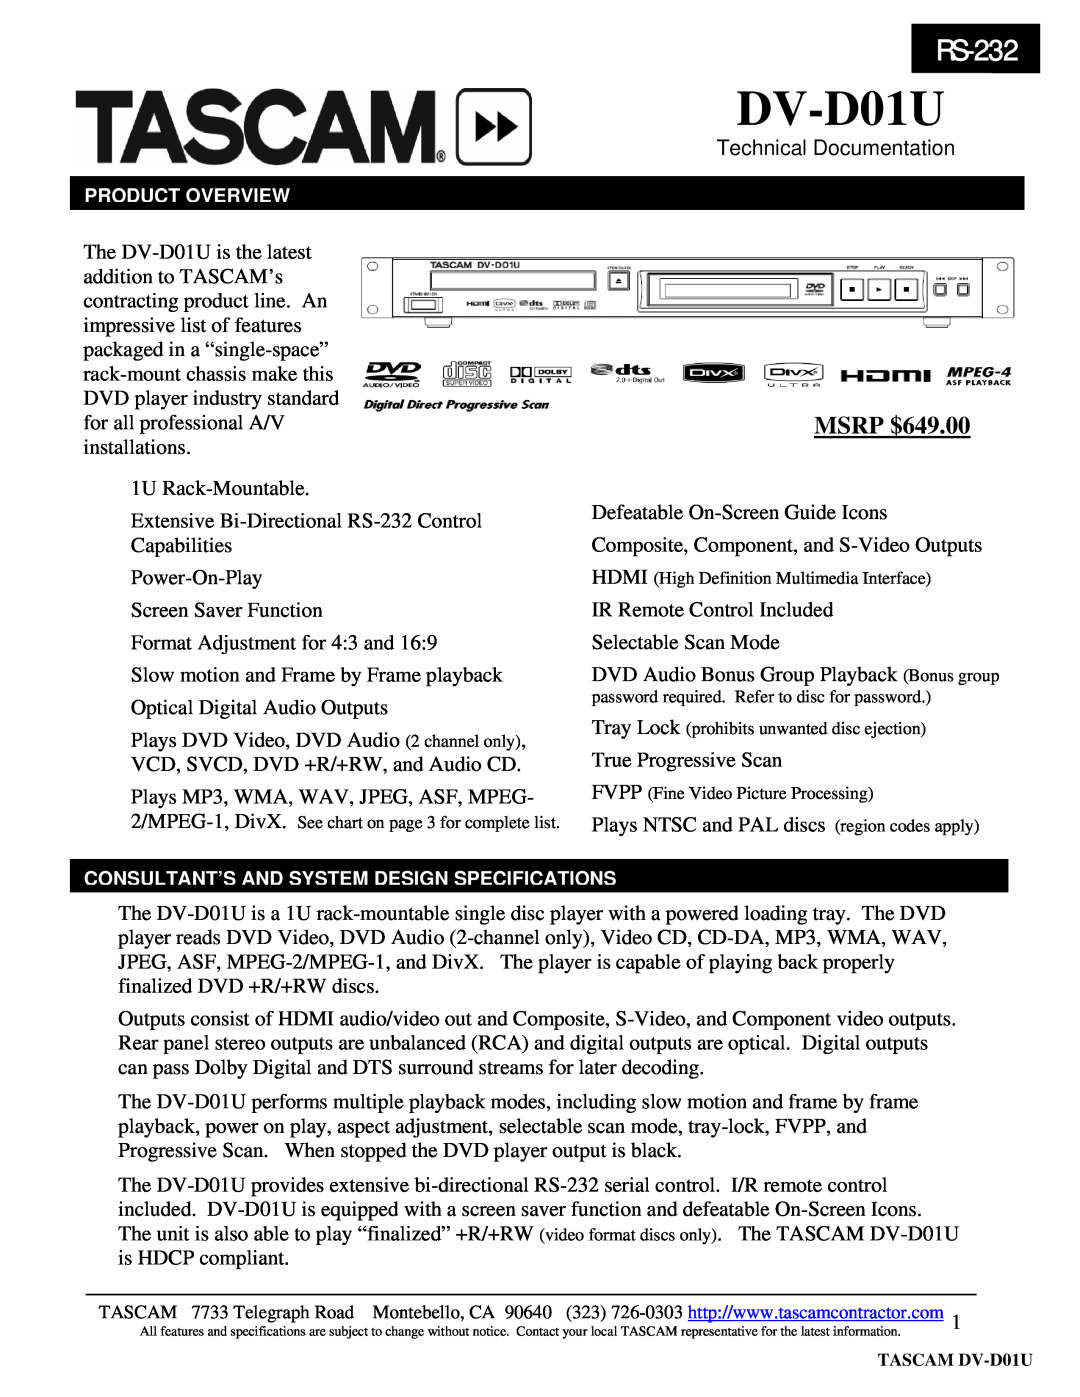 Tascam DV-D01U specifications RS-232, MSRP $649.00 